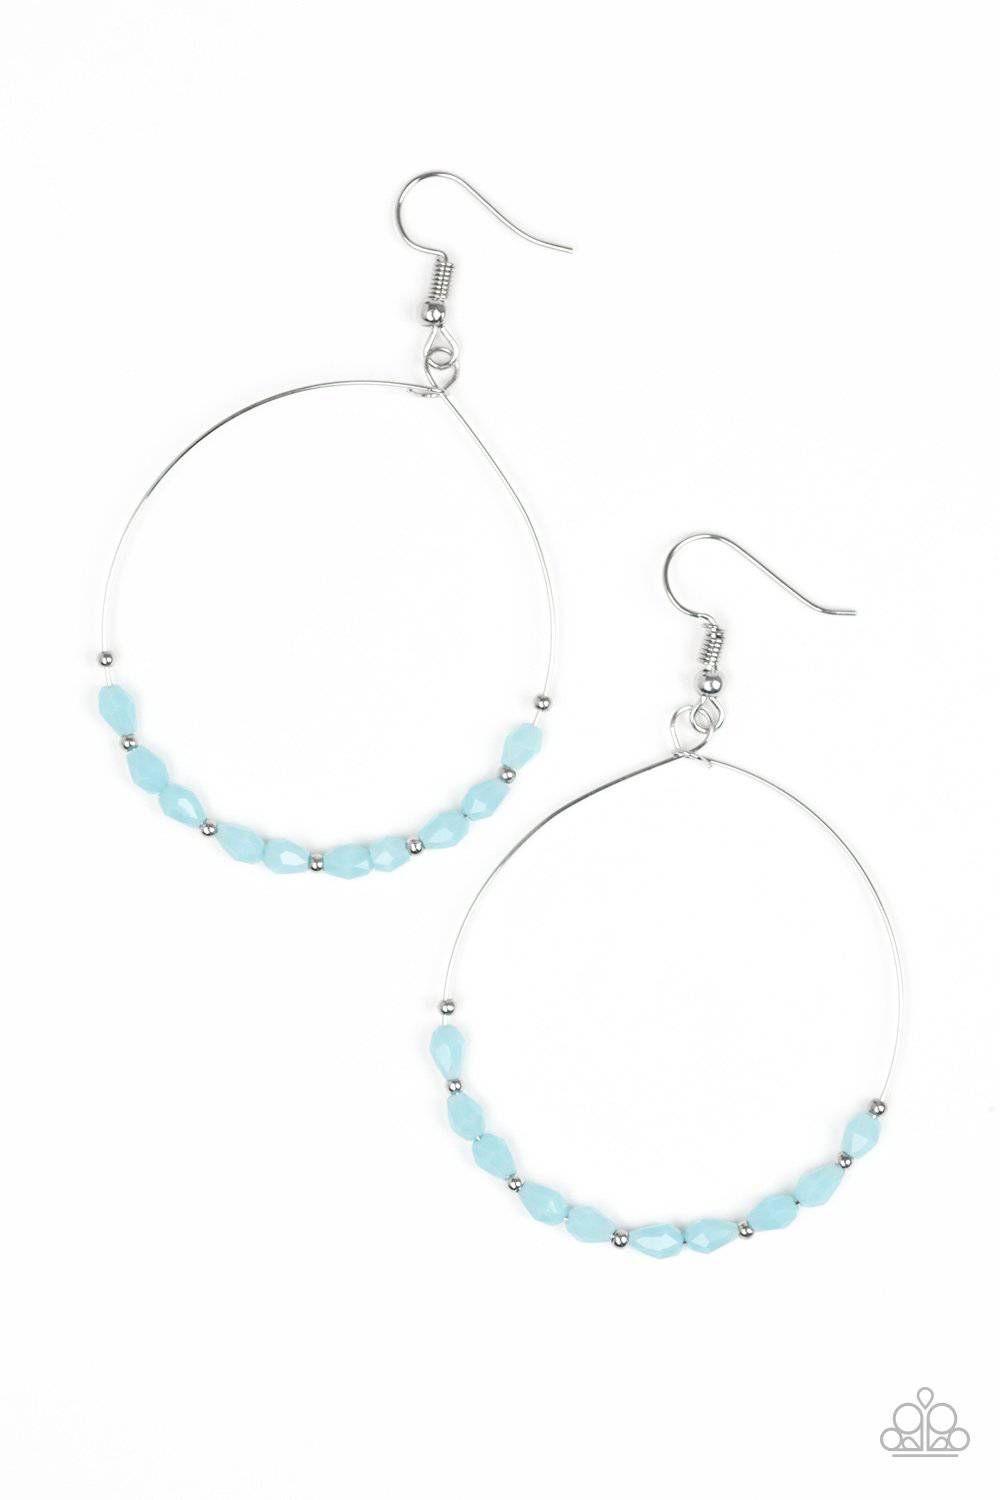 Prize Winning Sparkle - Blue Bead Earrings - Paparazzi Accessories - GlaMarous Titi Jewels